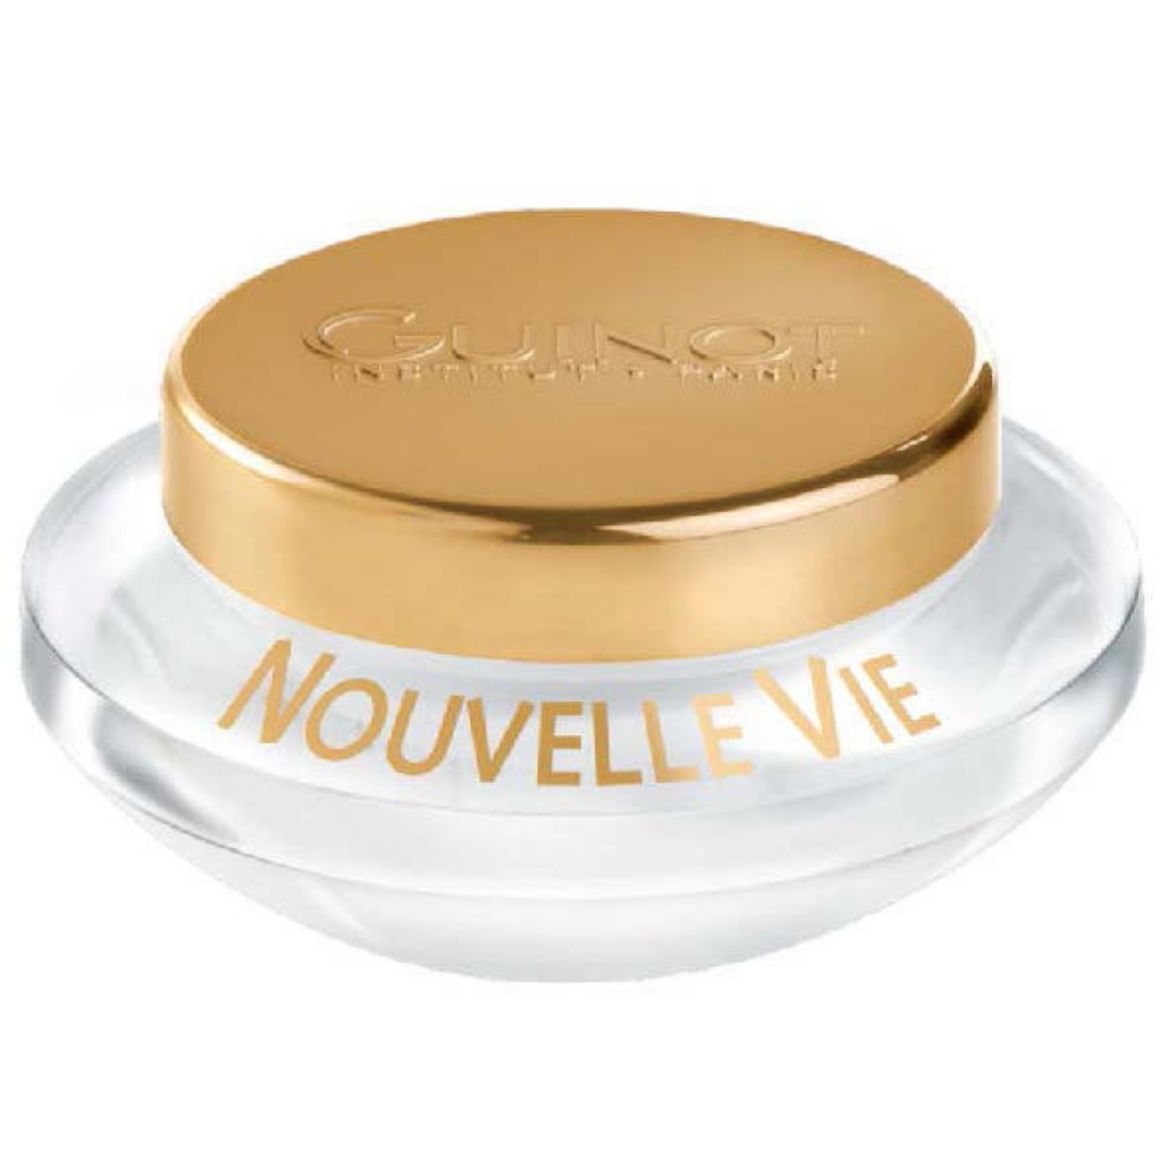 Image of Guinot Nouvelle Vie Cream (50ml)